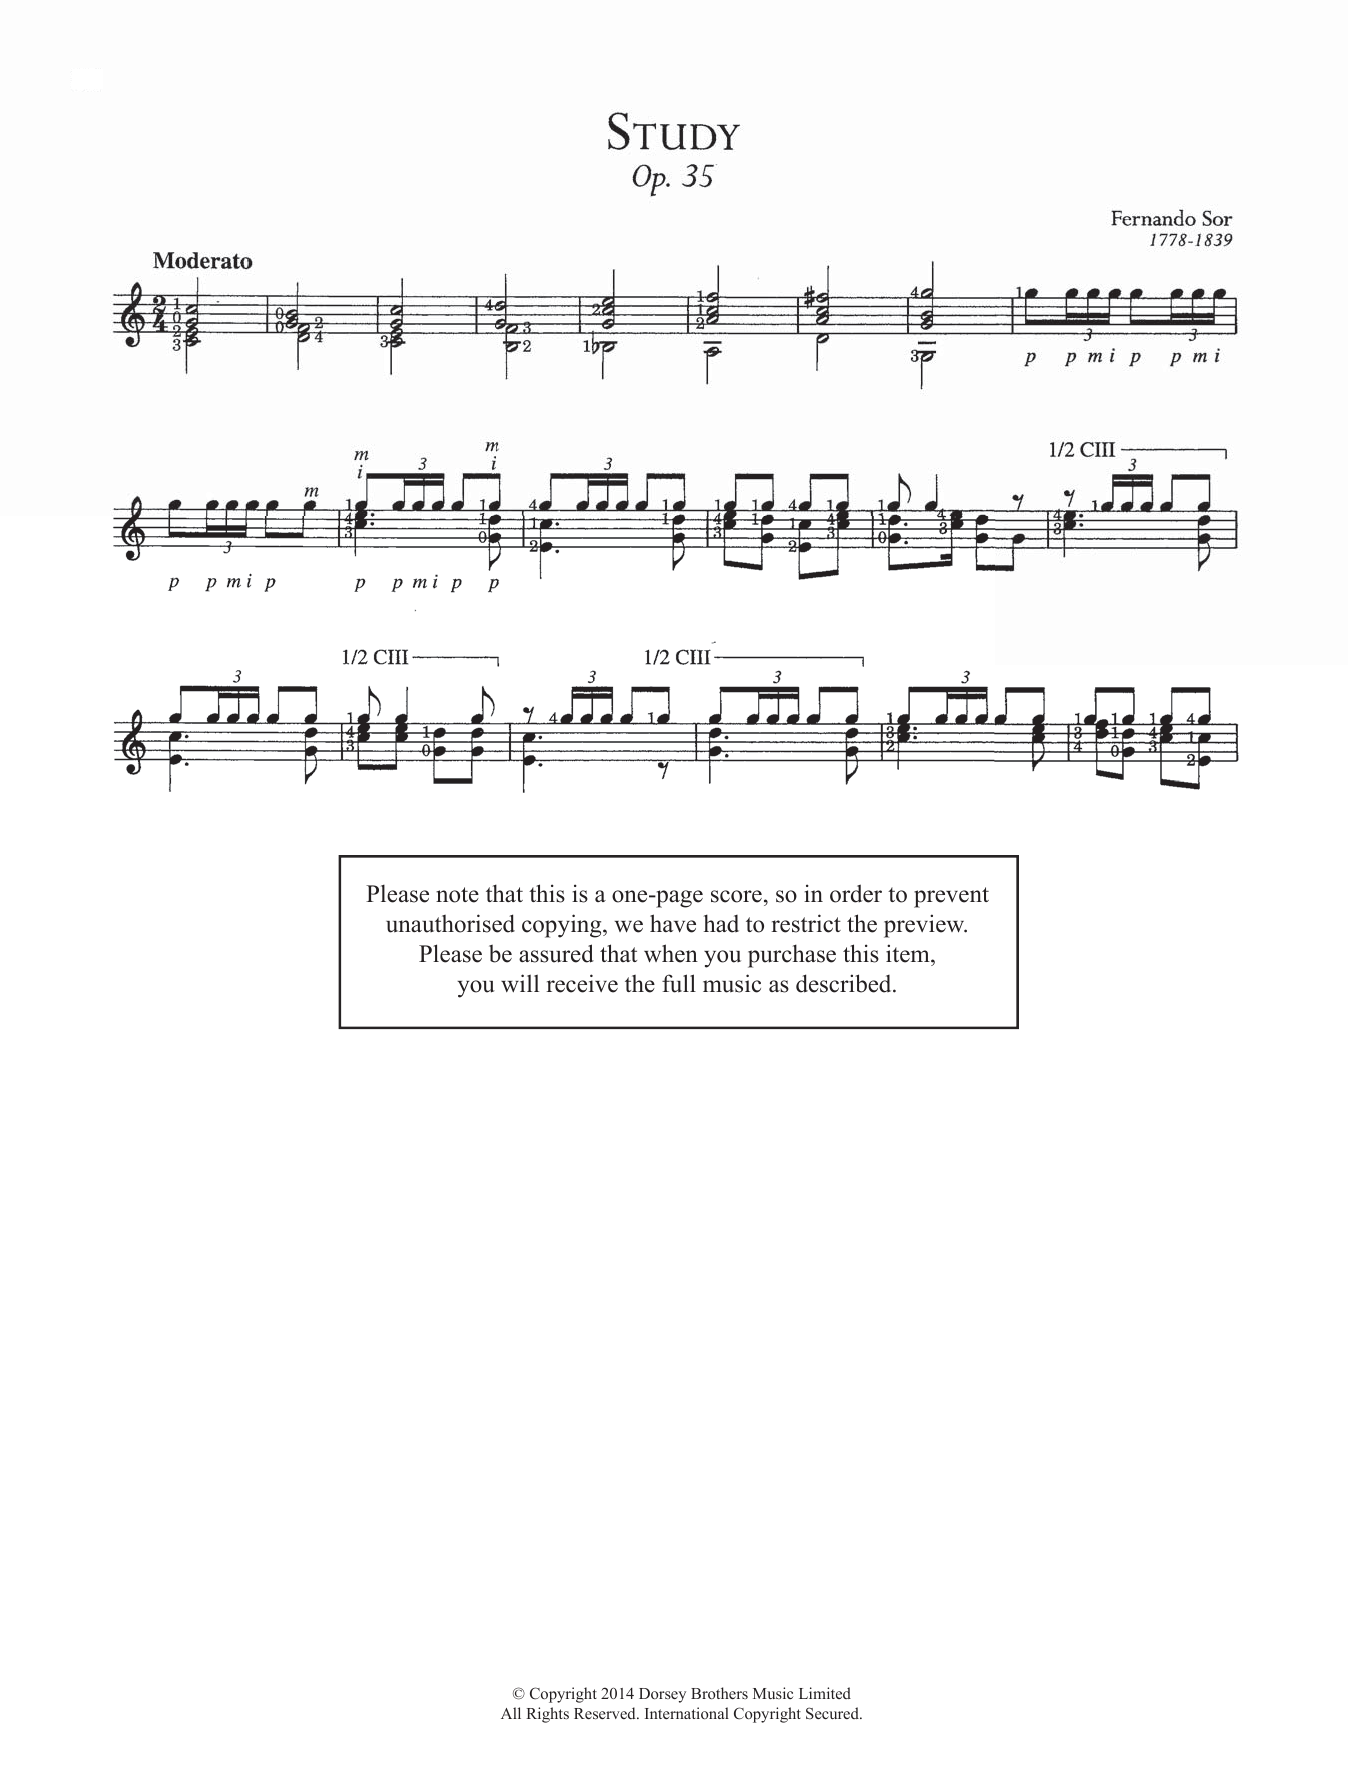 Fernando Sor Study, Op.35 Sheet Music Notes & Chords for Guitar - Download or Print PDF